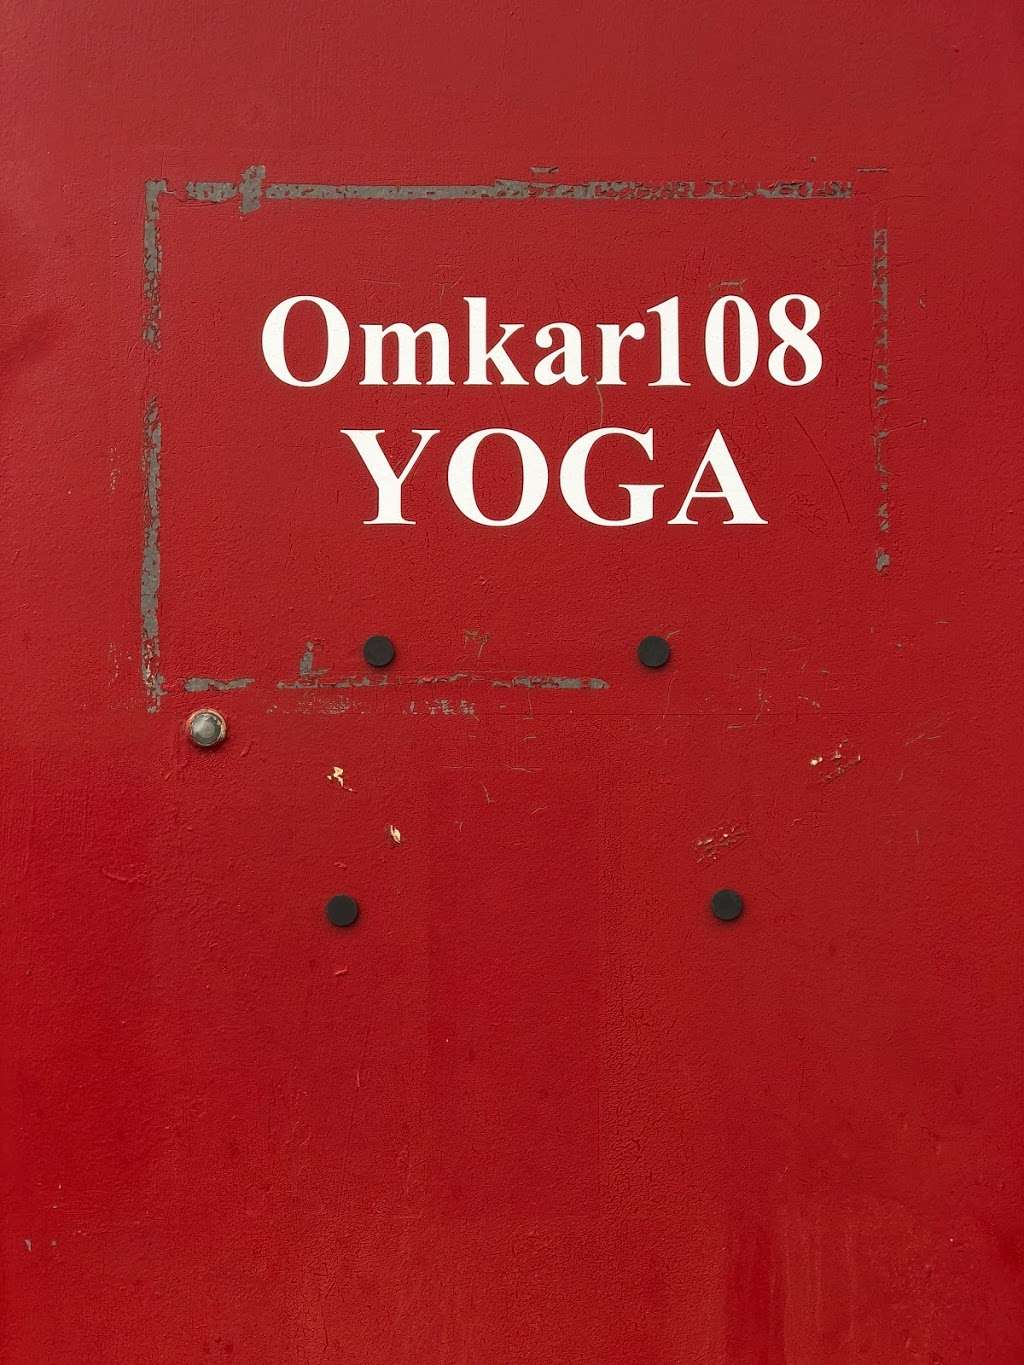 Omkar108 Yoga | 11154 Washington Blvd, Culver City, CA 90232 | Phone: (310) 853-3214